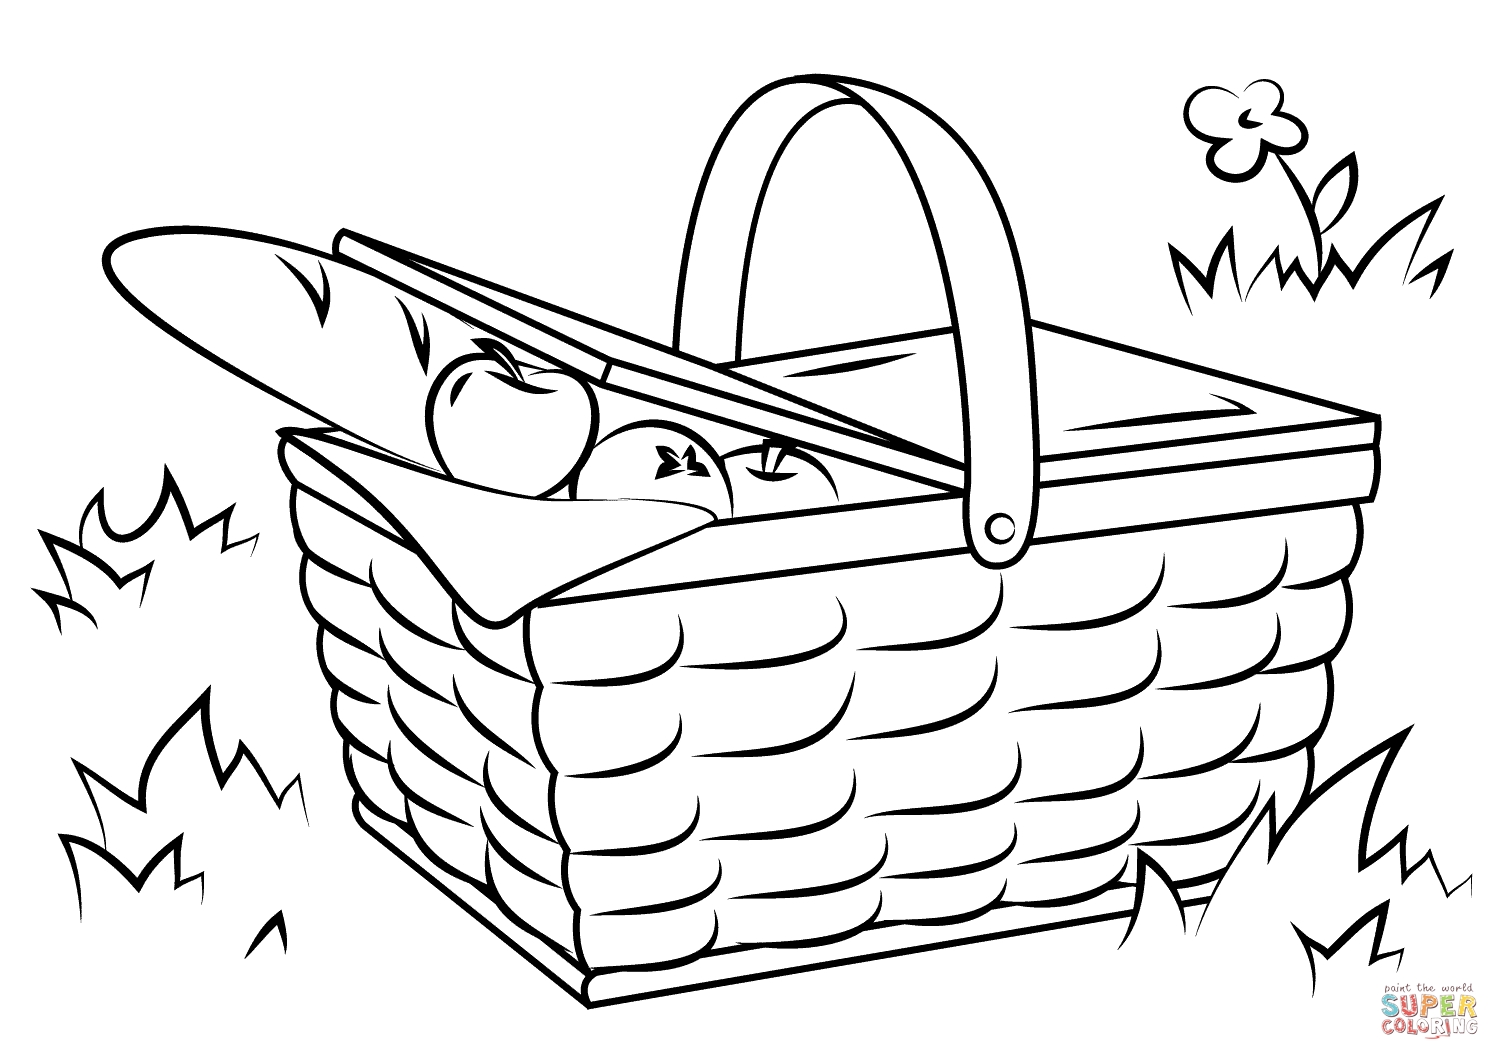 Picnic Basket Coloring Page at Free printable